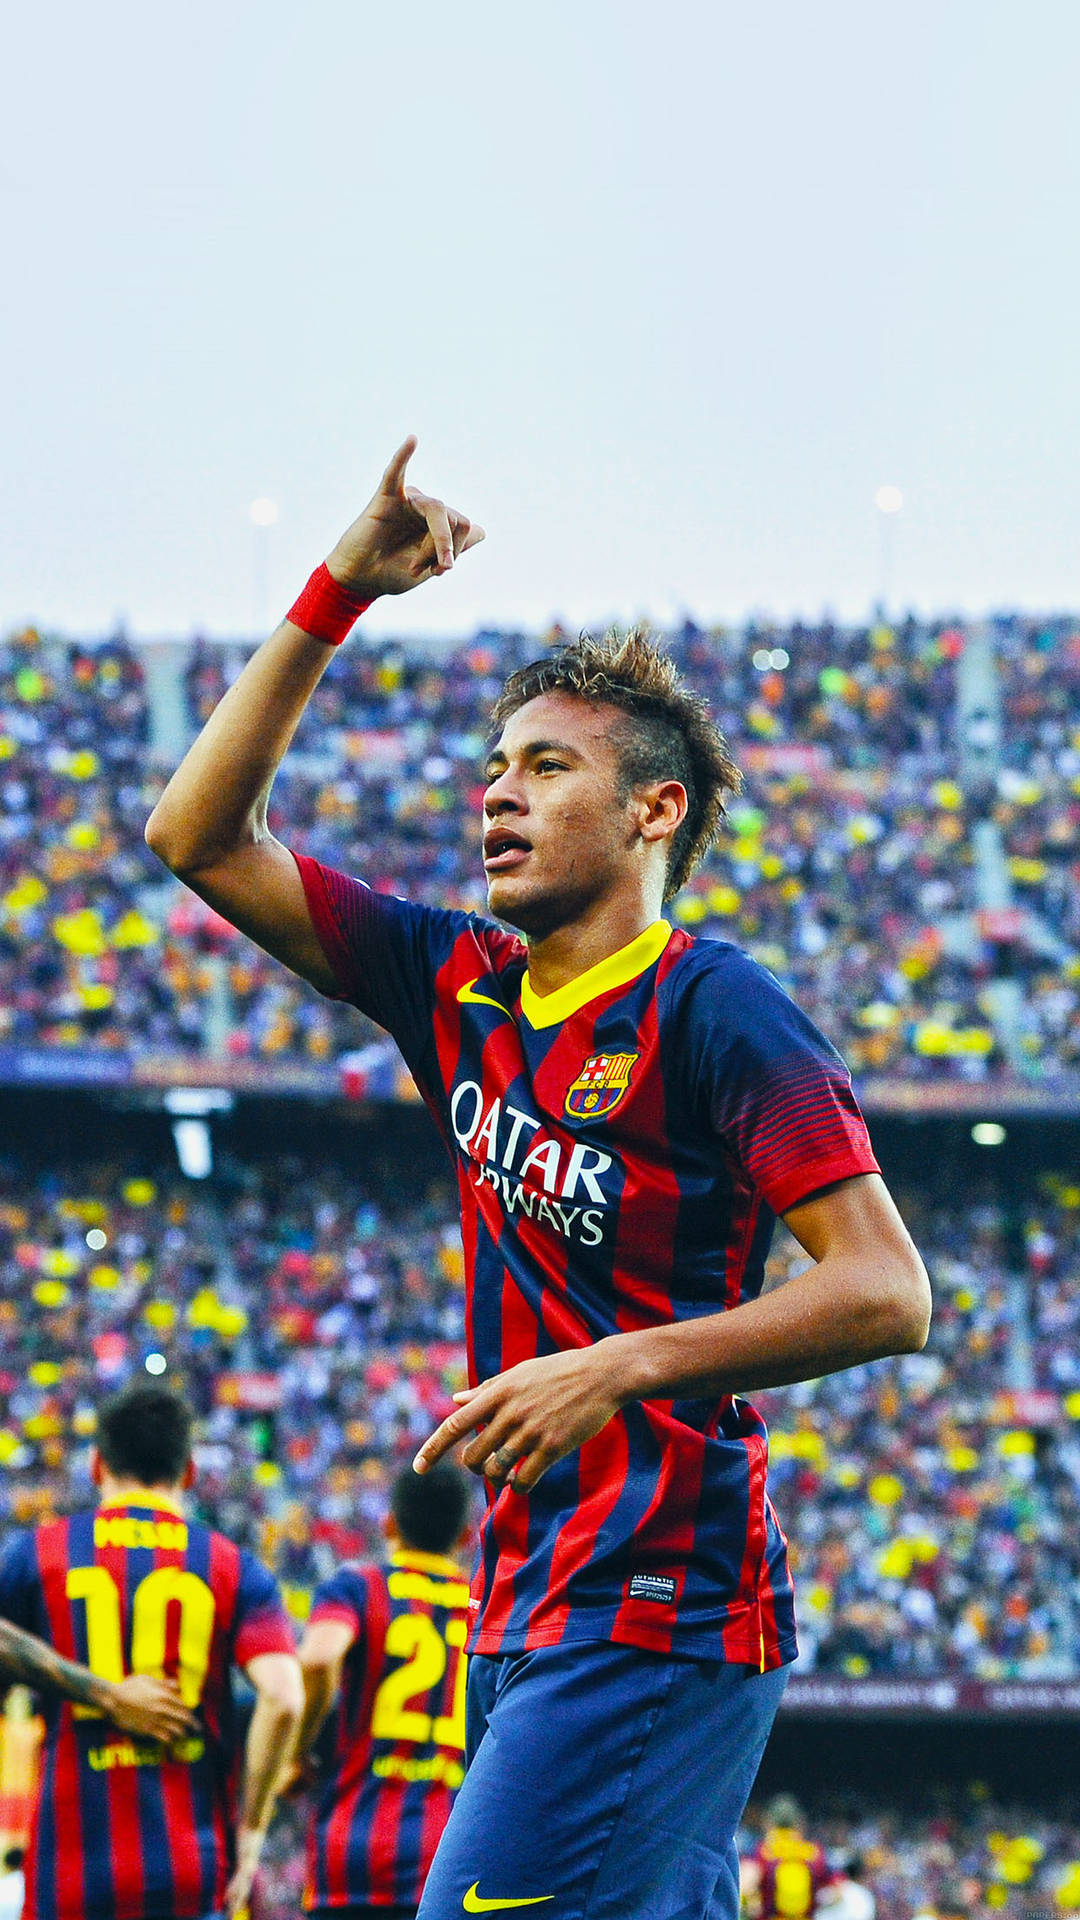 Brazilian Professional Footballer Neymar Hyping The Crowd Sports iPhone Wallpaper